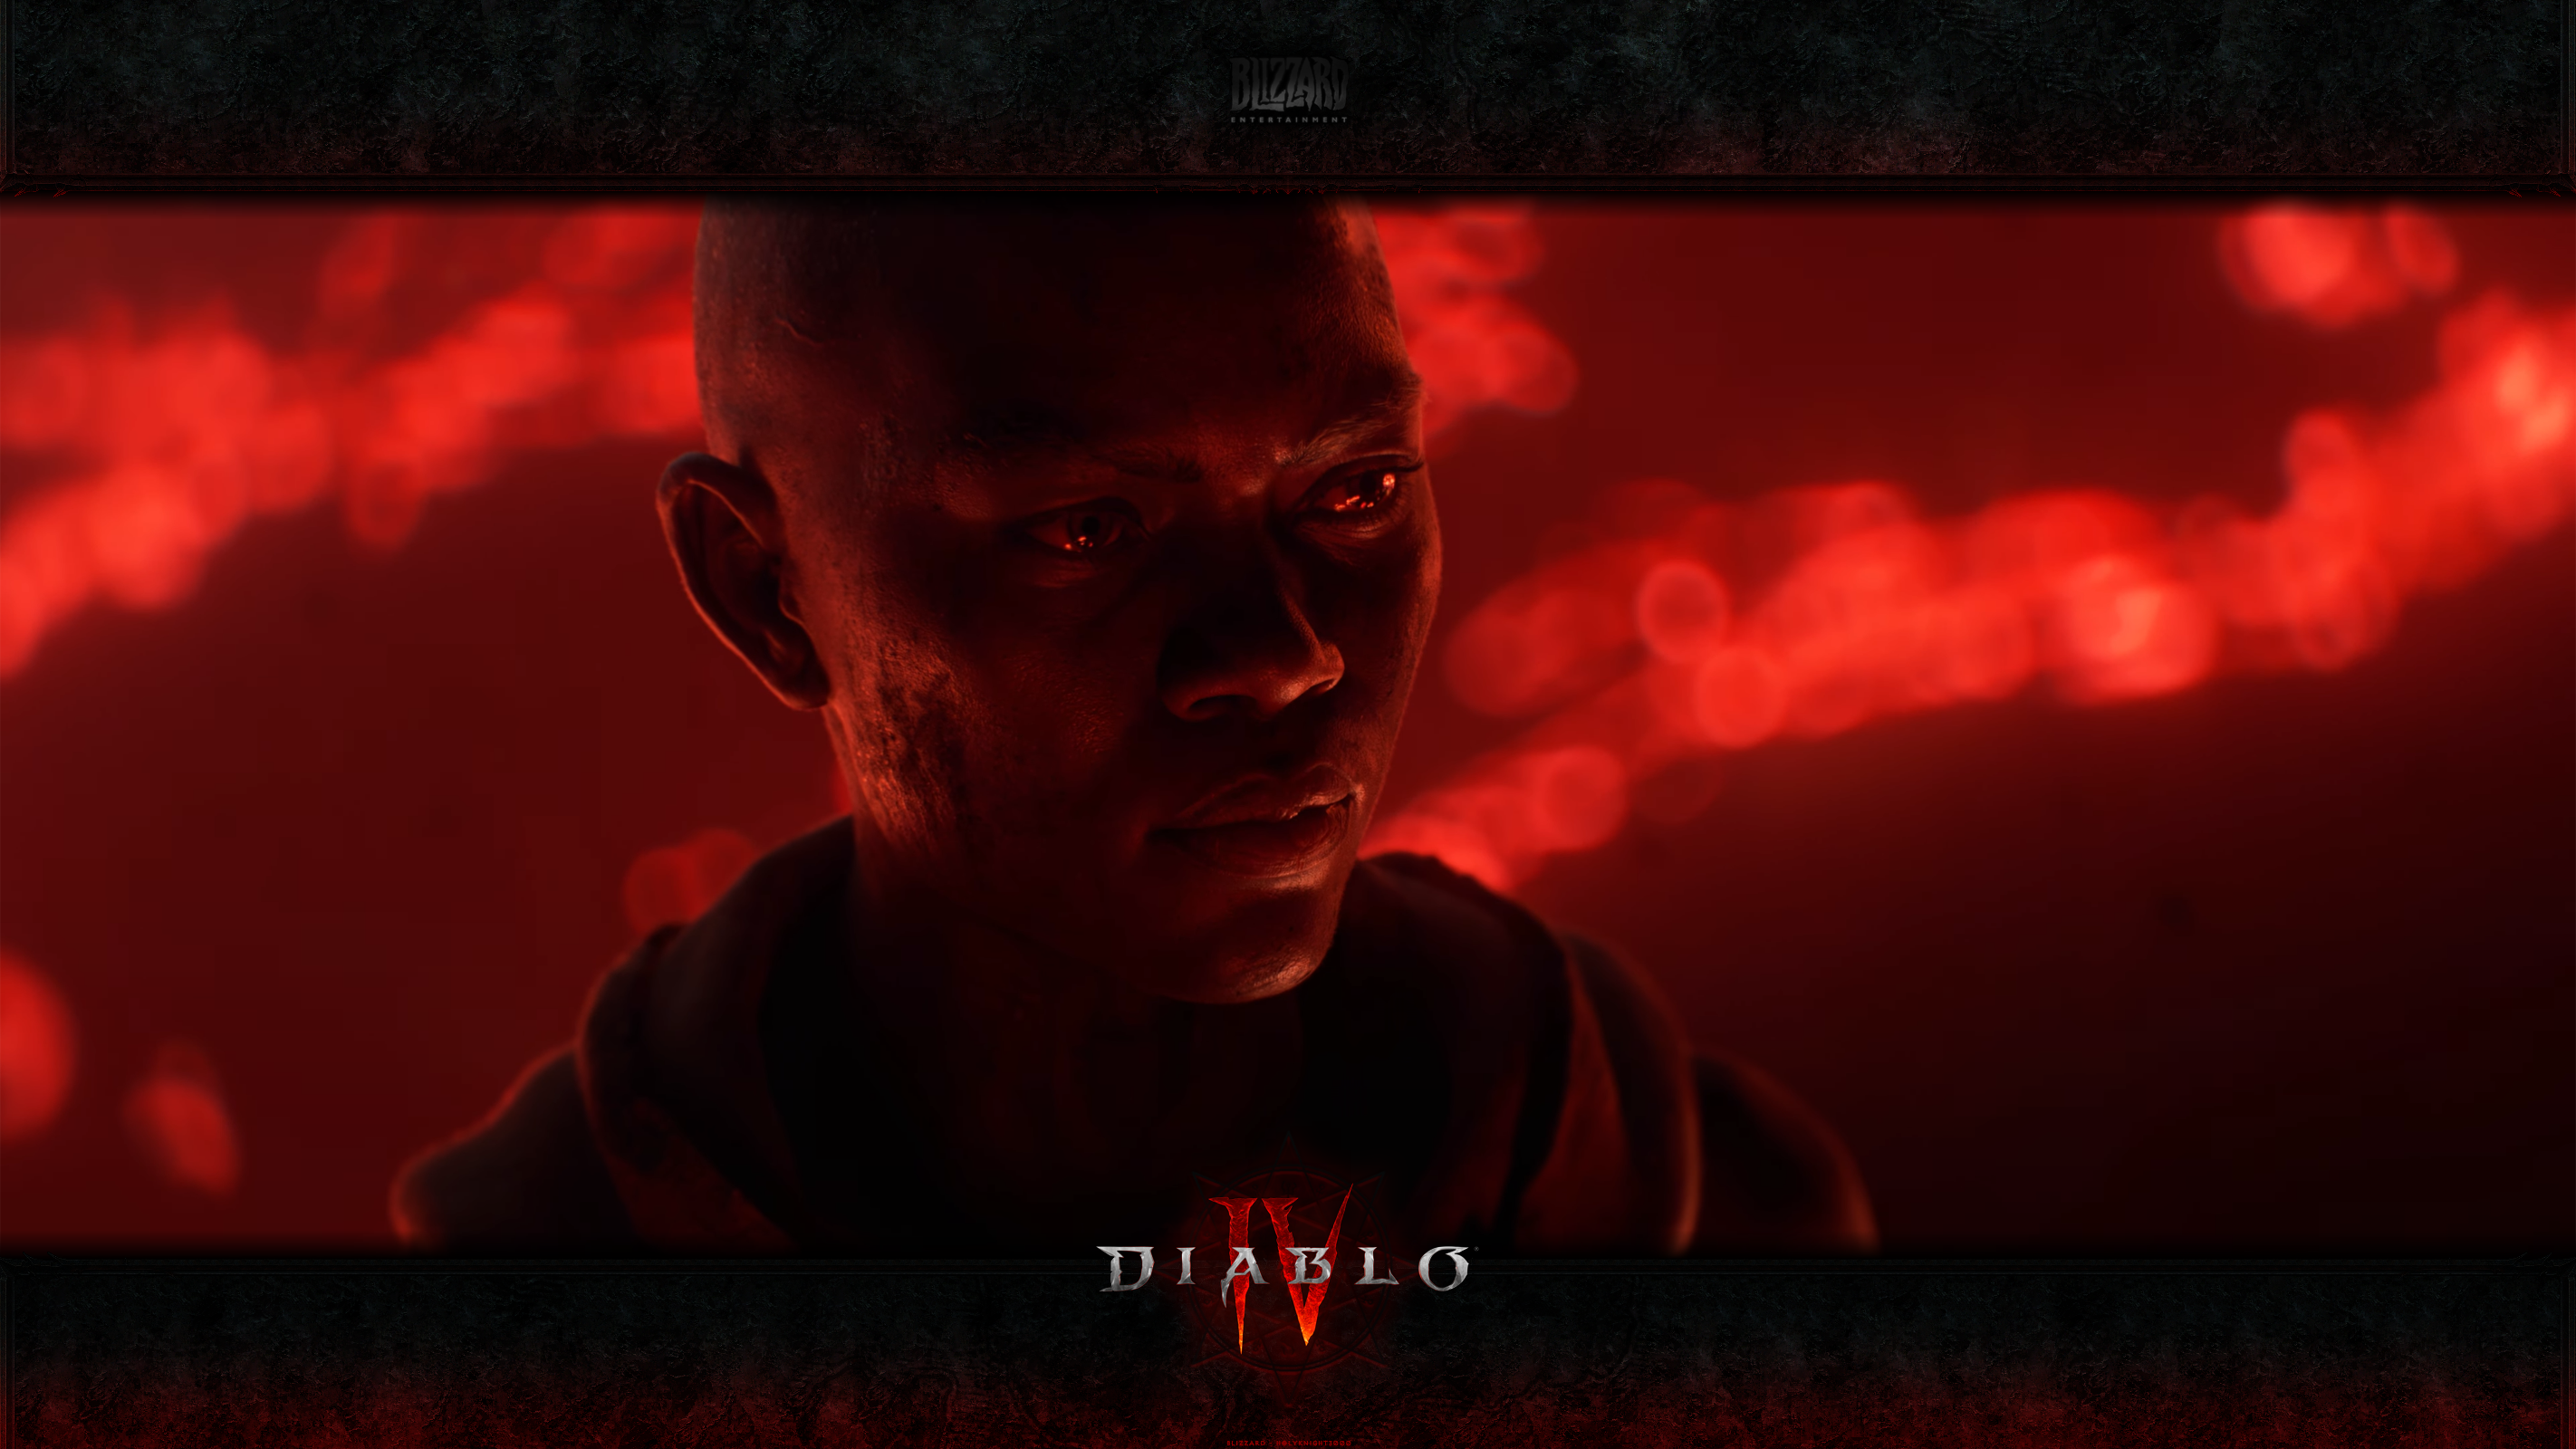 Diablo IV: The Release Date Trailer #23